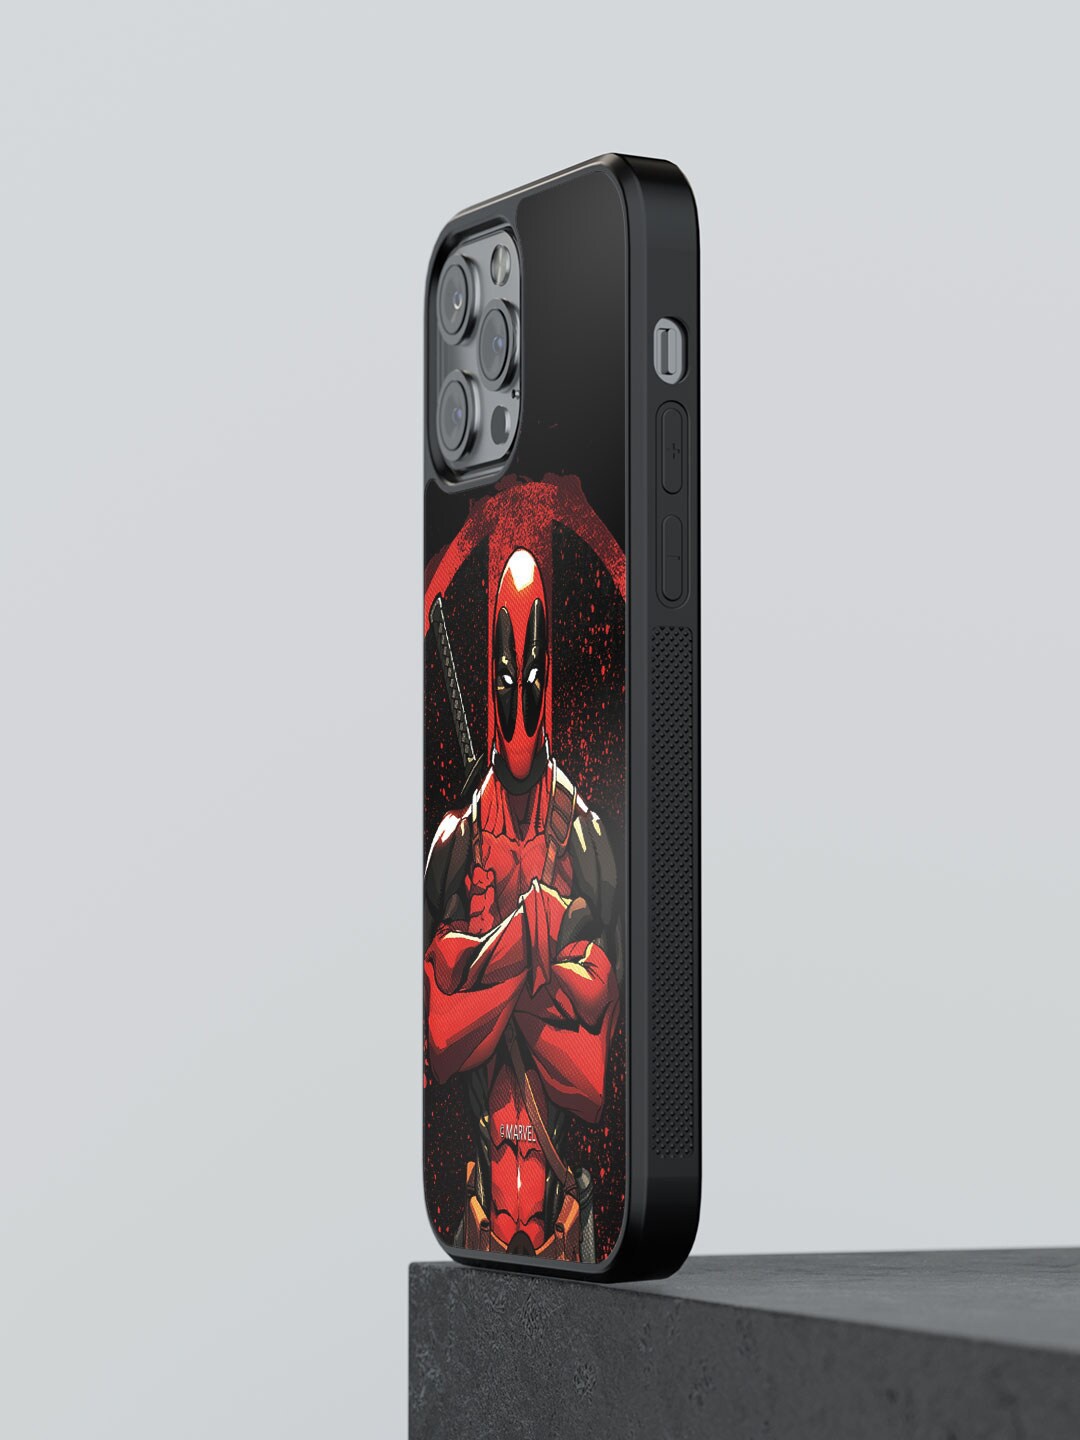 

macmerise Deadpool Printed iPhone 12 Pro Max Phone Bumper Case, Red